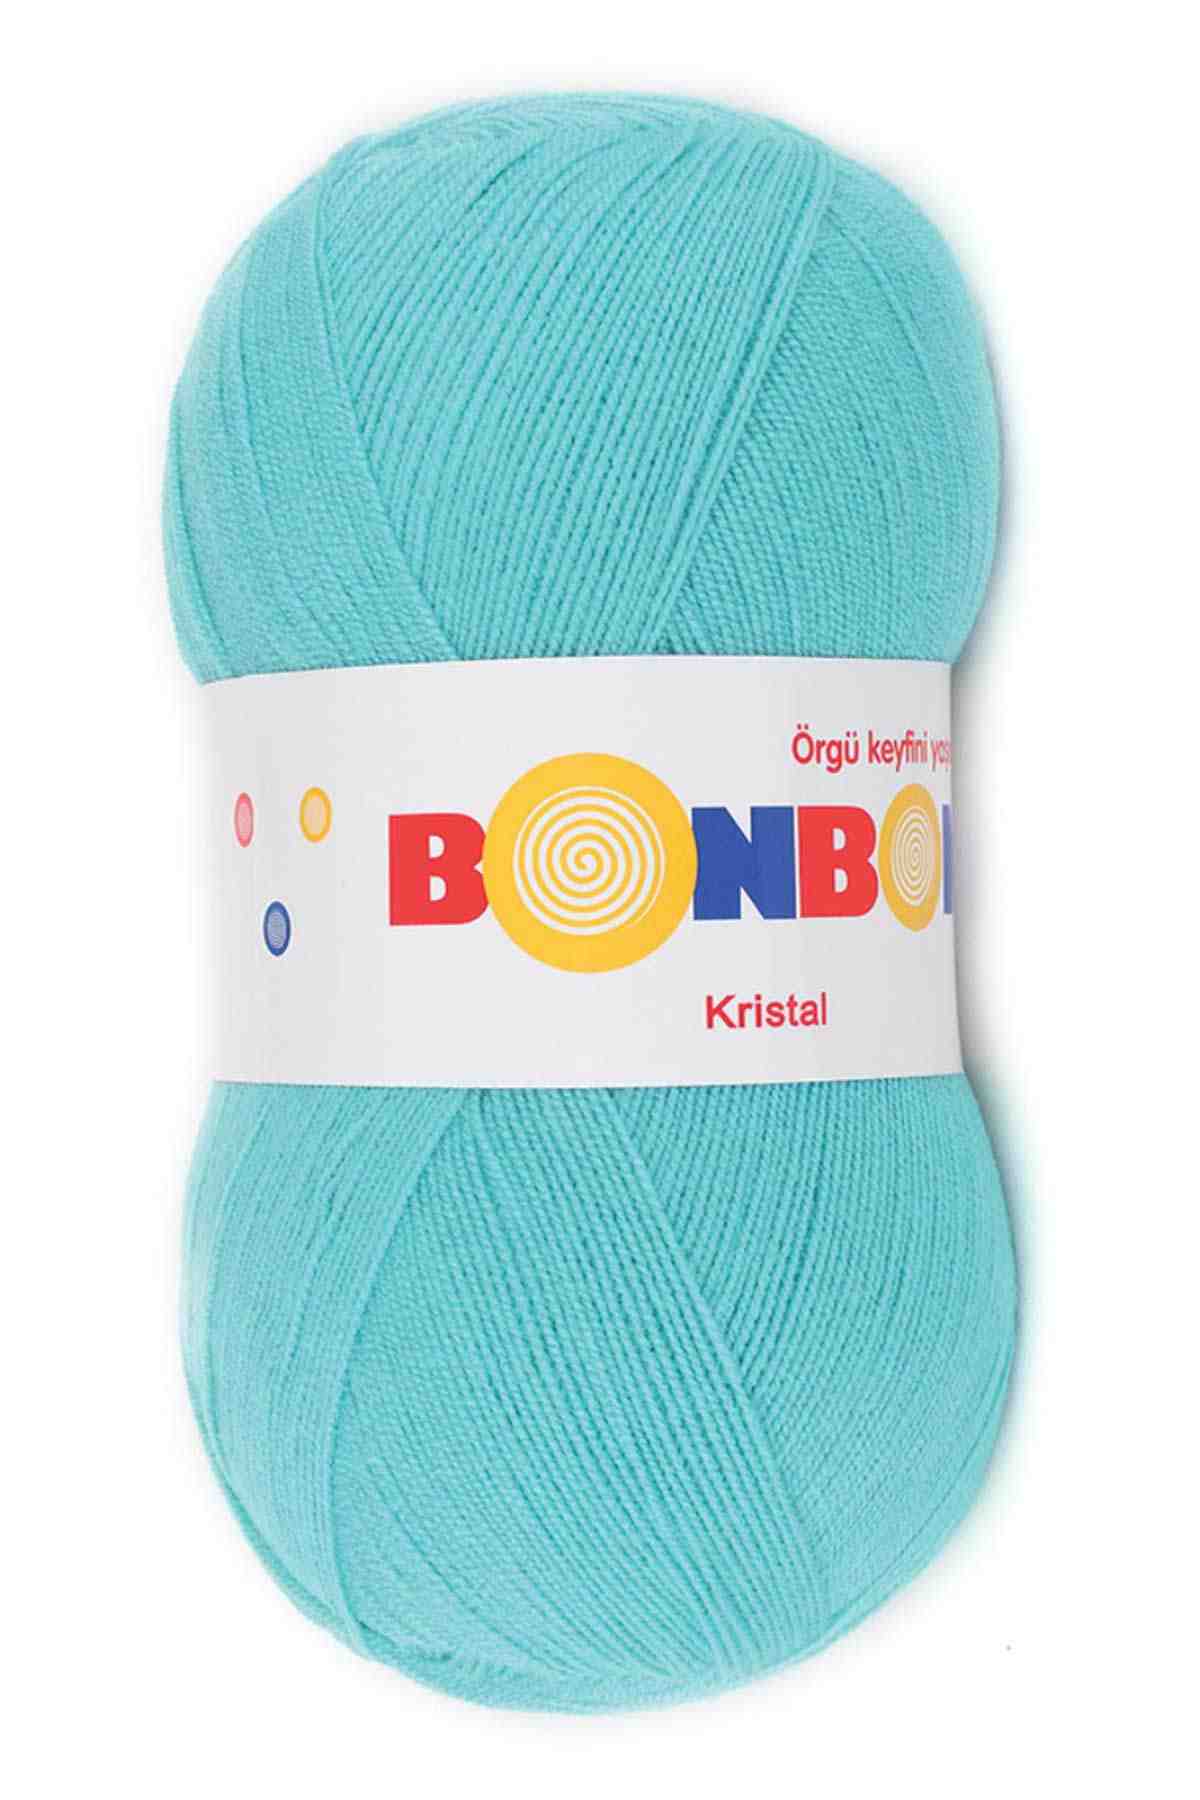 Nako Bonbon Kristal Acrylic Yarn